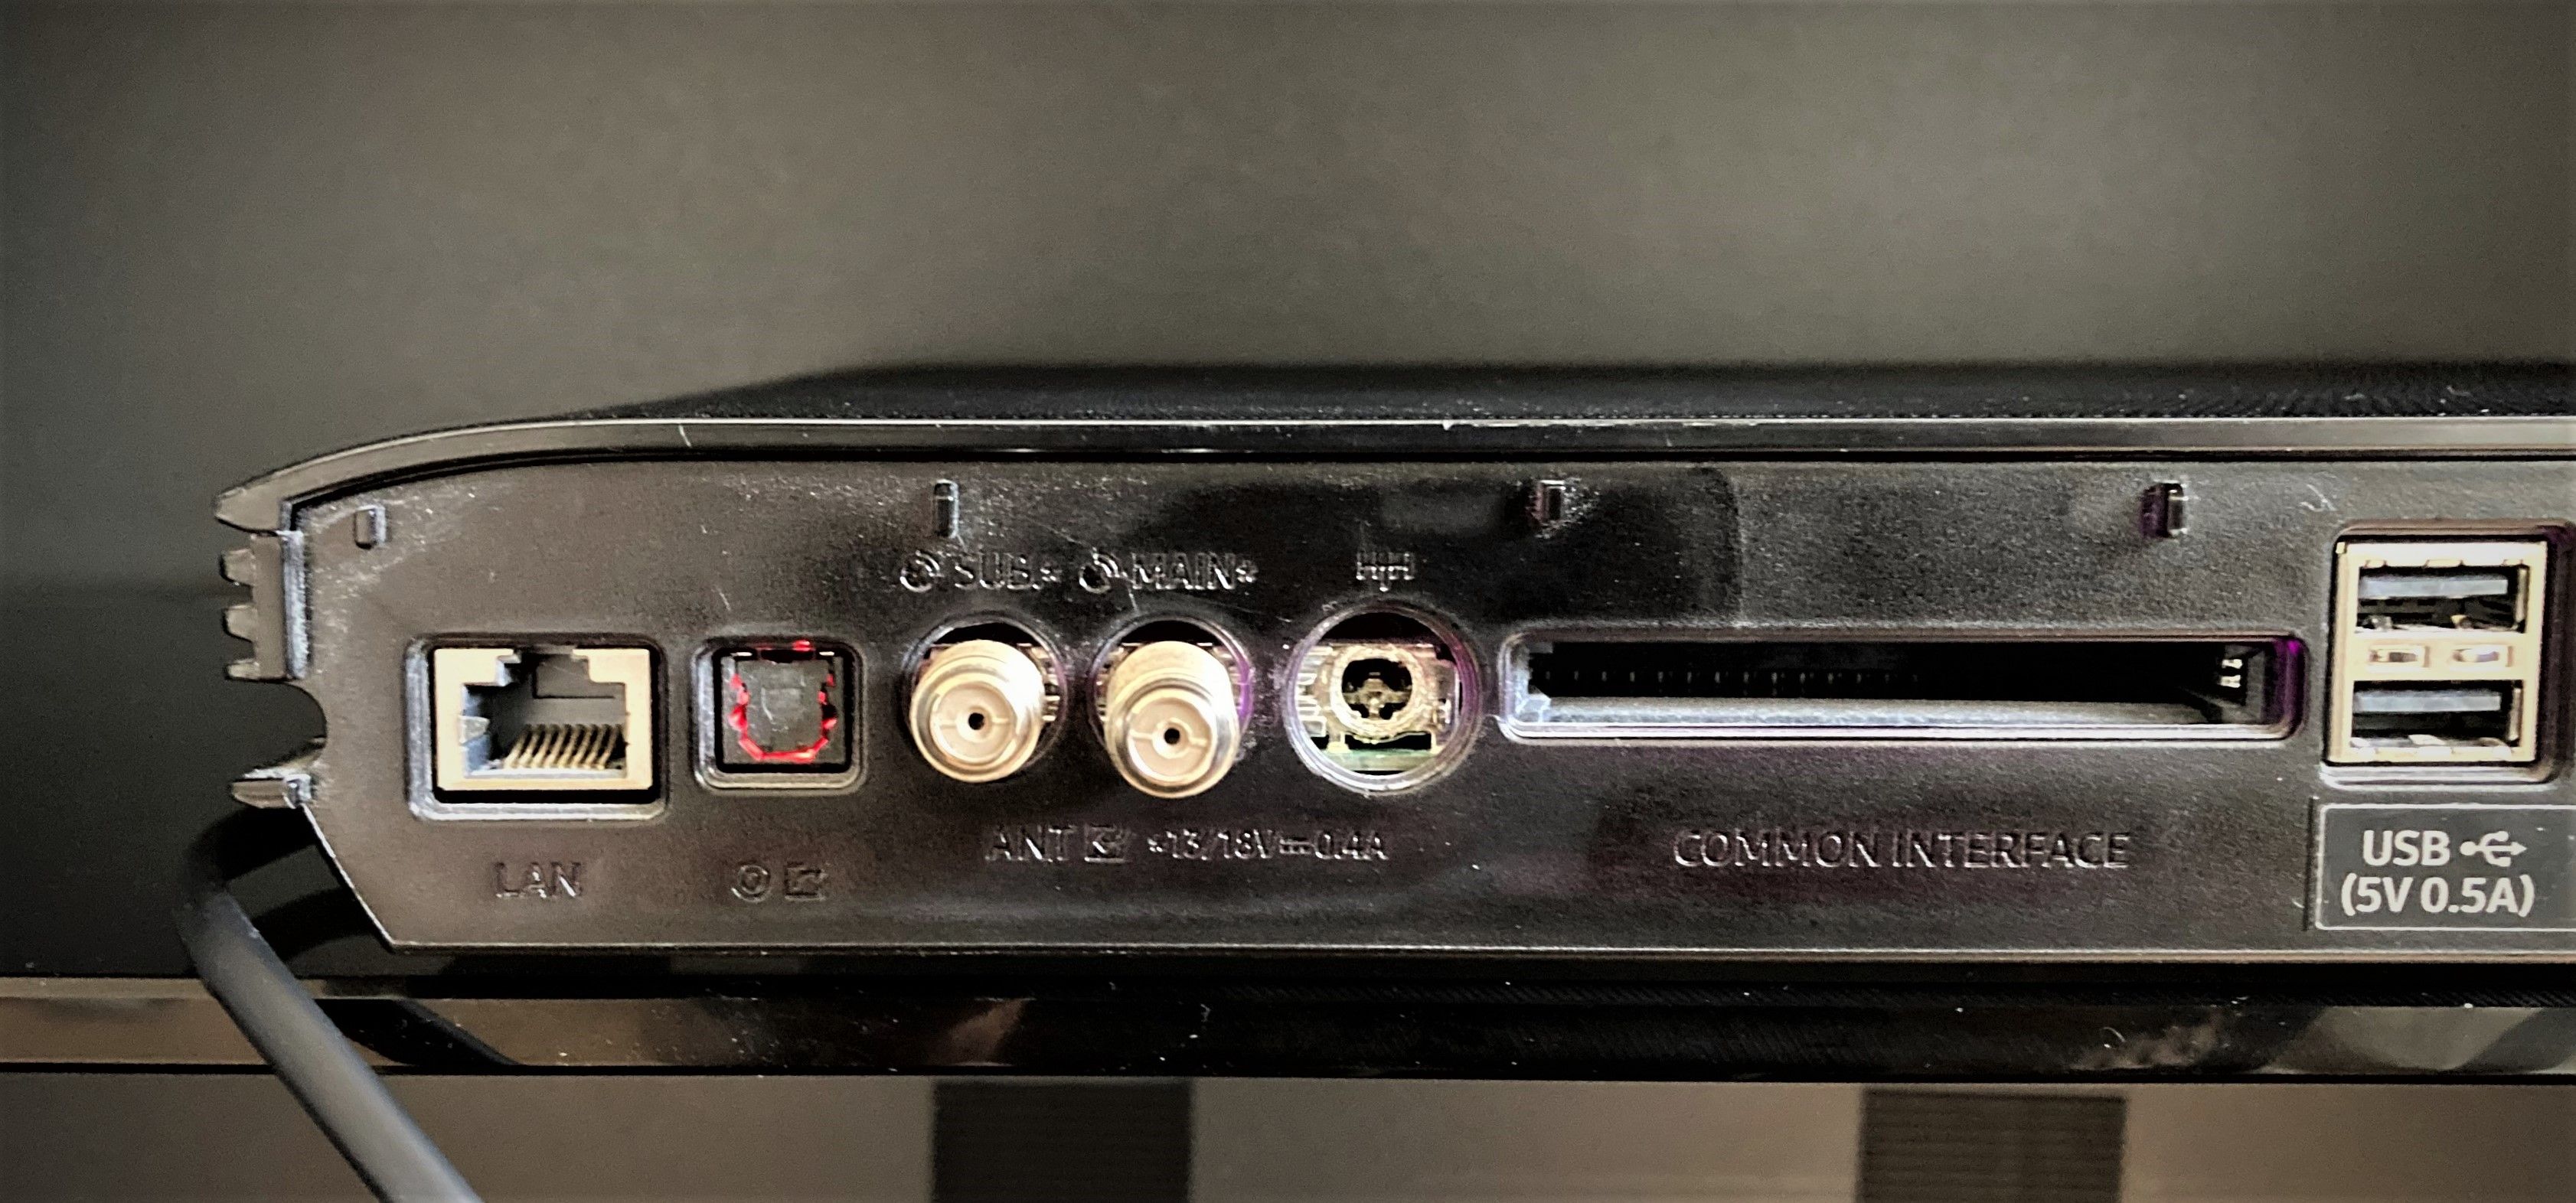 One Connect box - Broken Antenna socket - Samsung Community